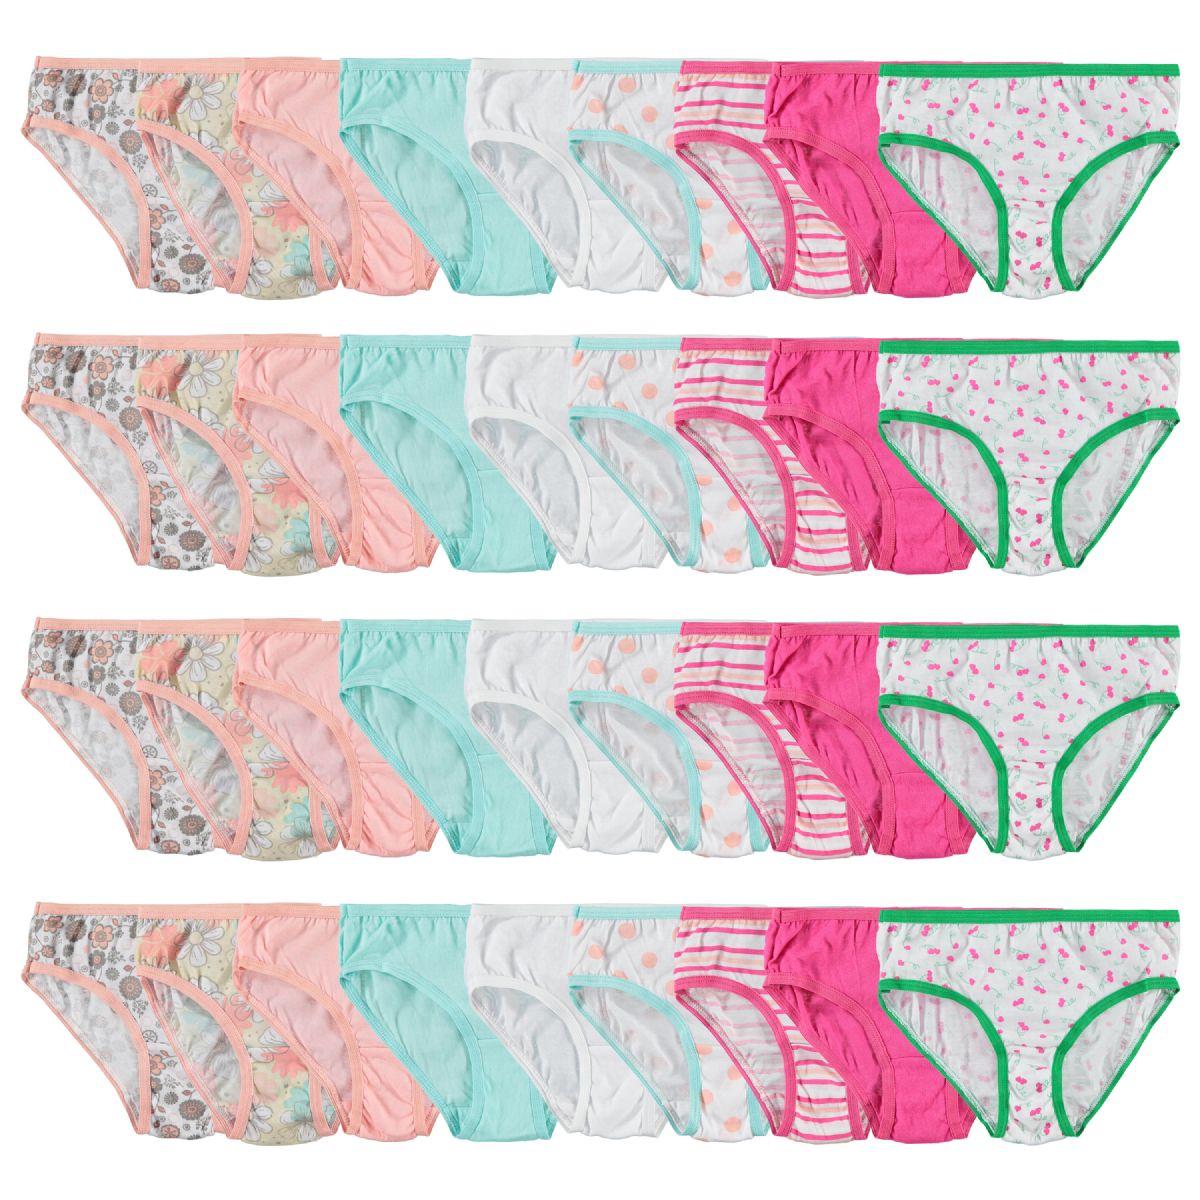 Girls Cotton Blend Assorted Printed Underwear Size 12 - at